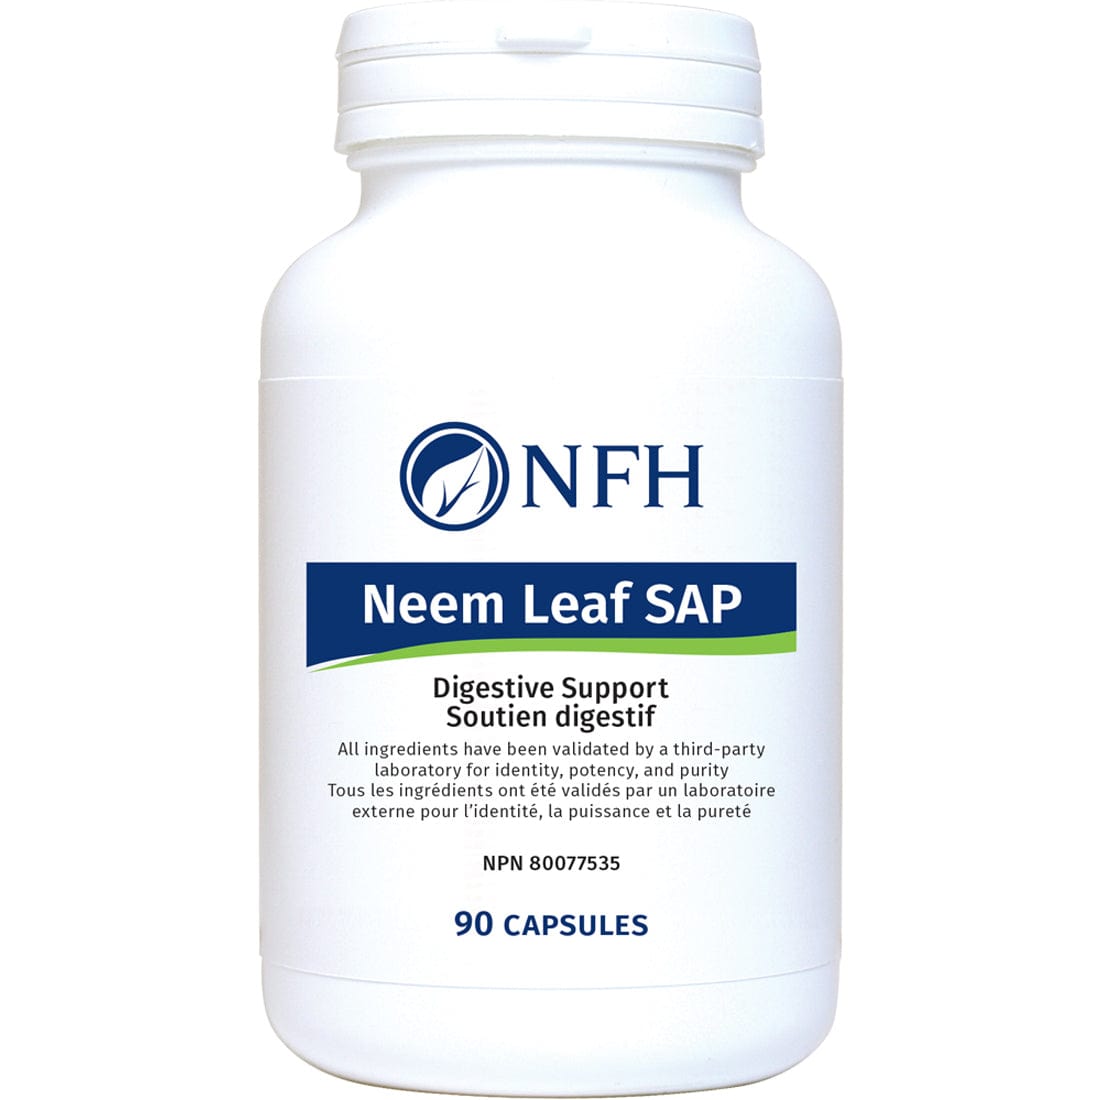 NFH Neem Leaf SAP, 90 Capsules